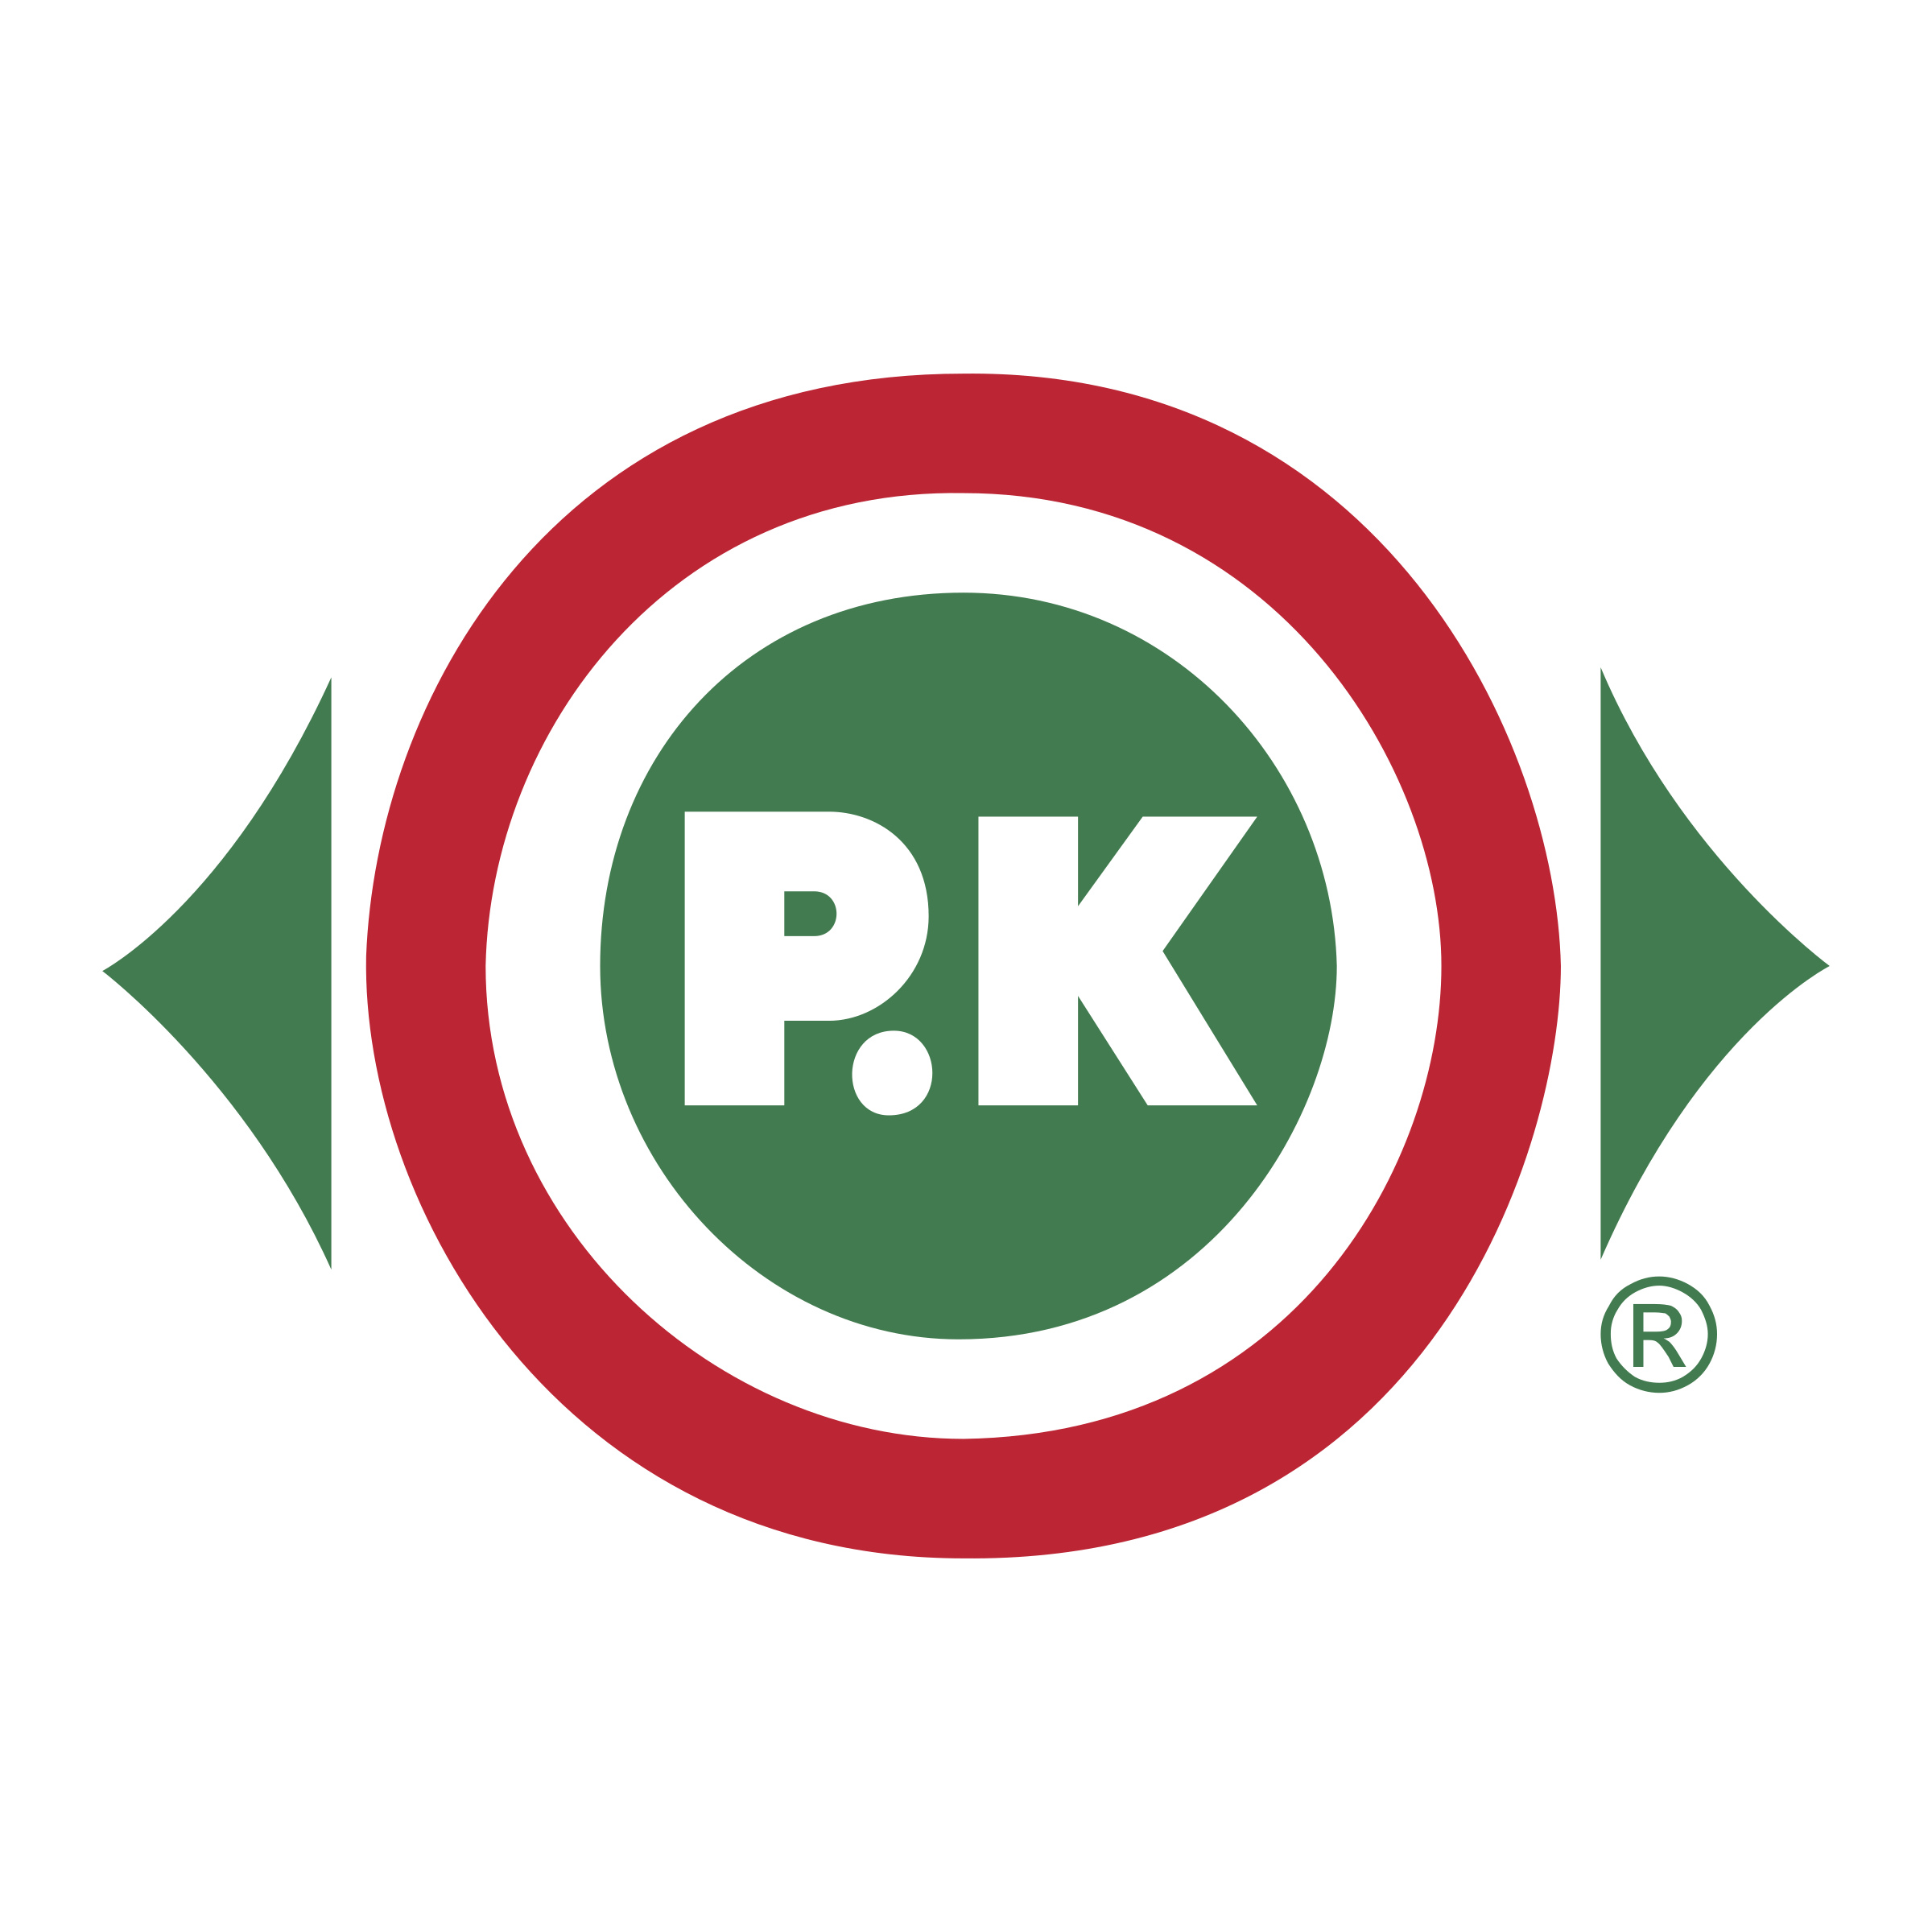 PK Logo - P K Logo PNG Transparent & SVG Vector